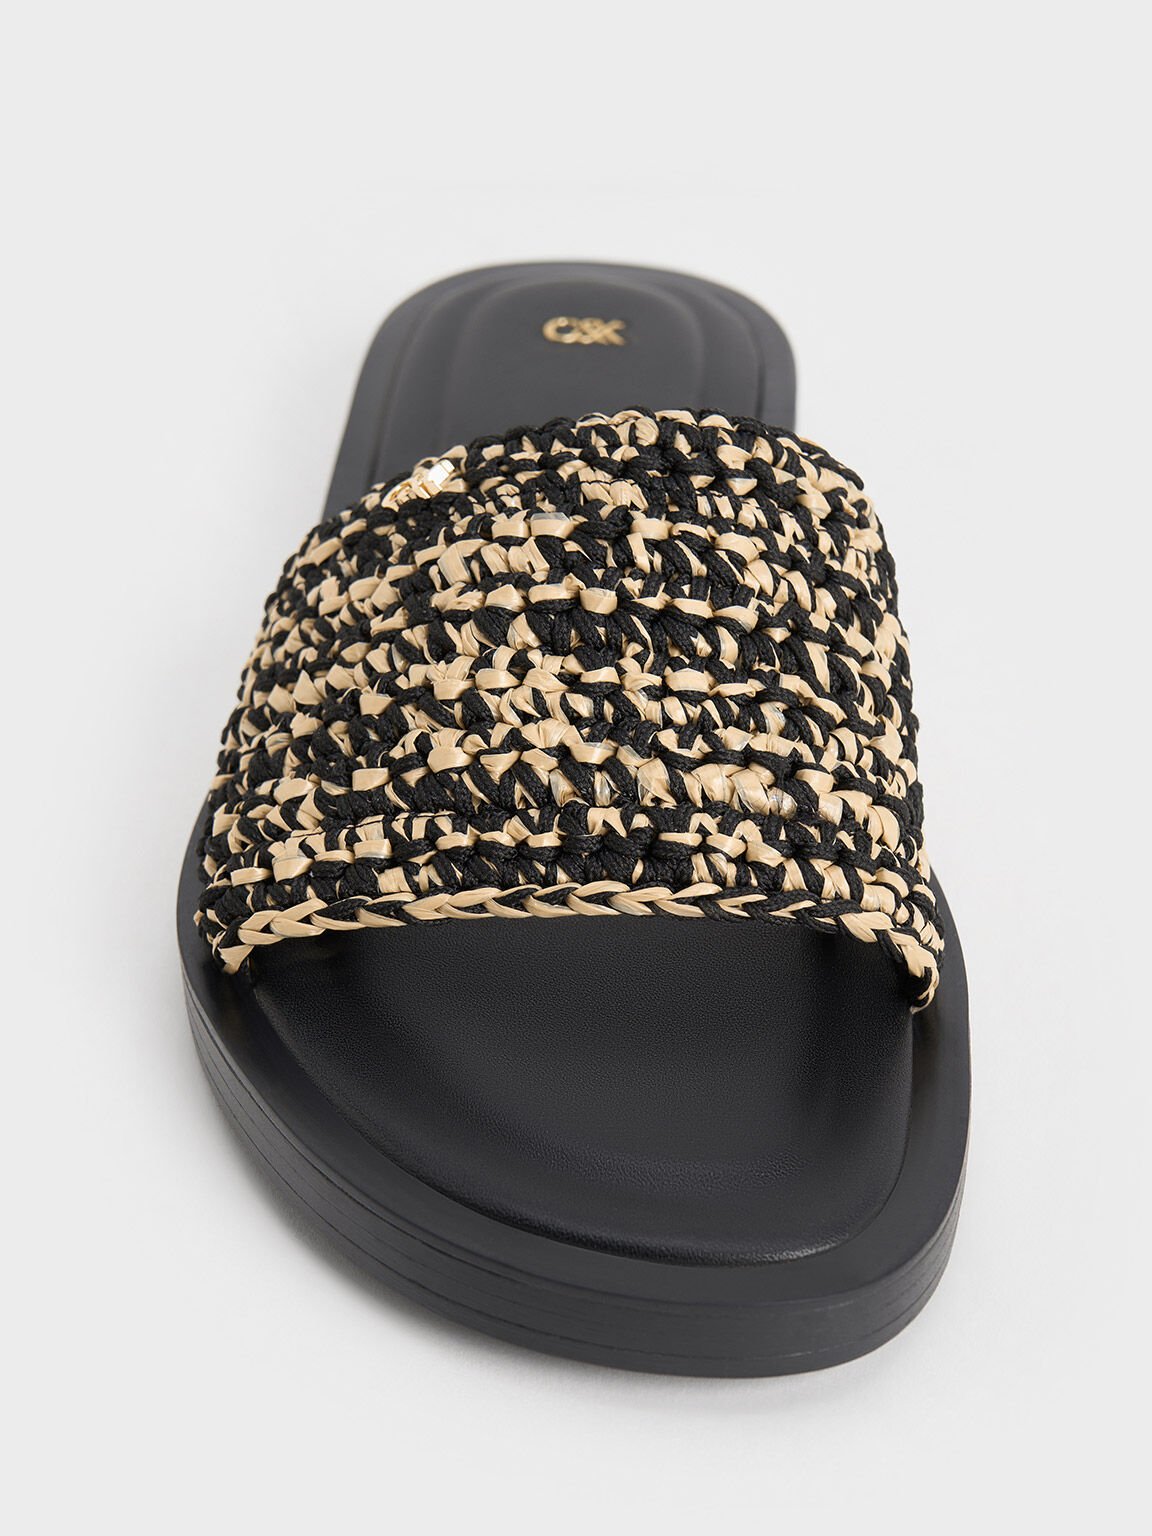 Woven Two-Tone Slide Sandals, Black Textured, hi-res